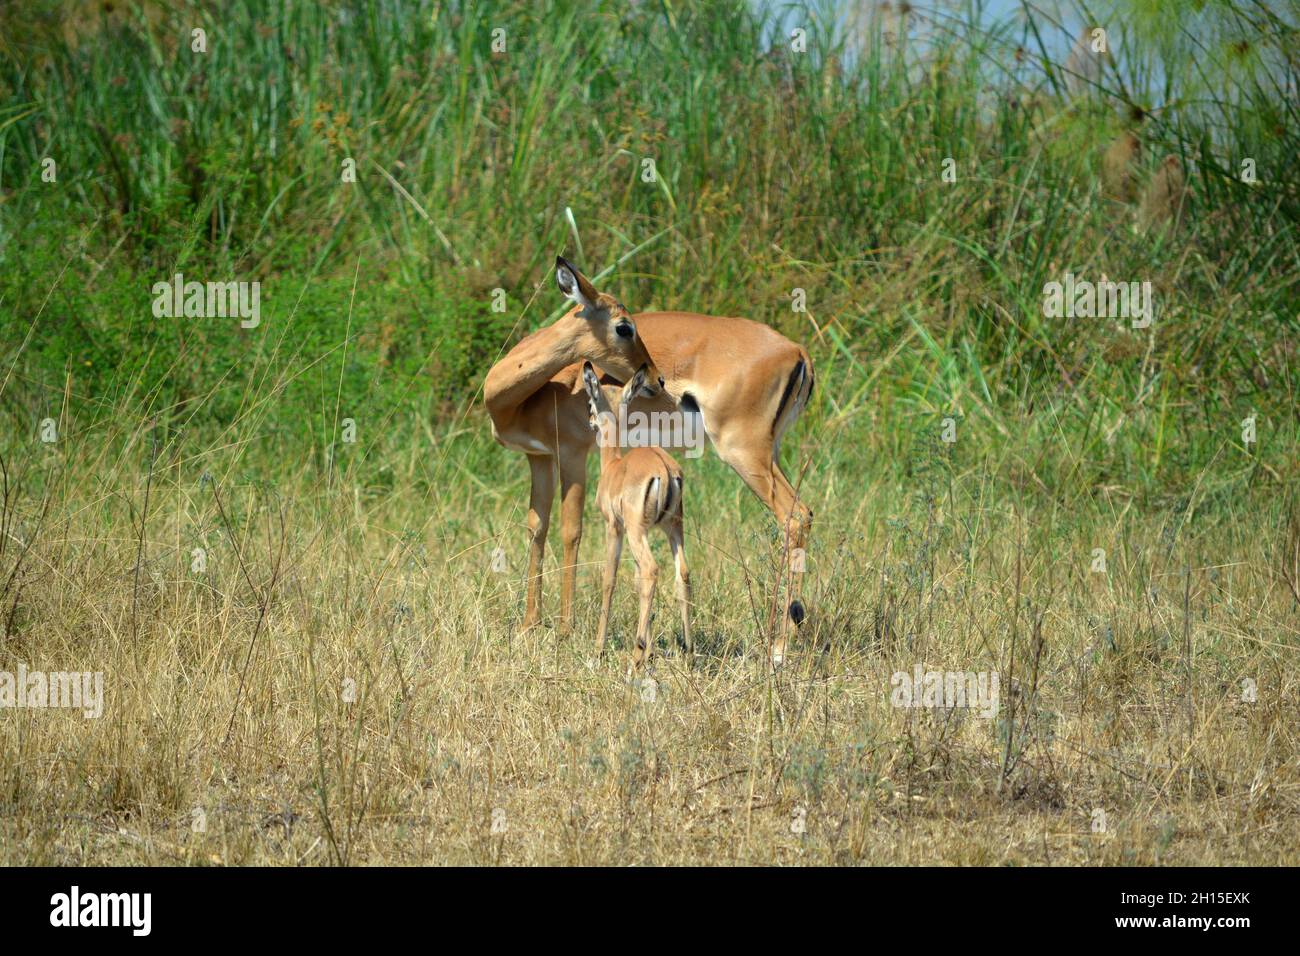 Ipalas (Aepyceros melampus), un genere di antilopi africani, situato nel Parco Nazionale di Akagera, una riserva naturale del Ruanda orientale, in Africa orientale. Foto Stock